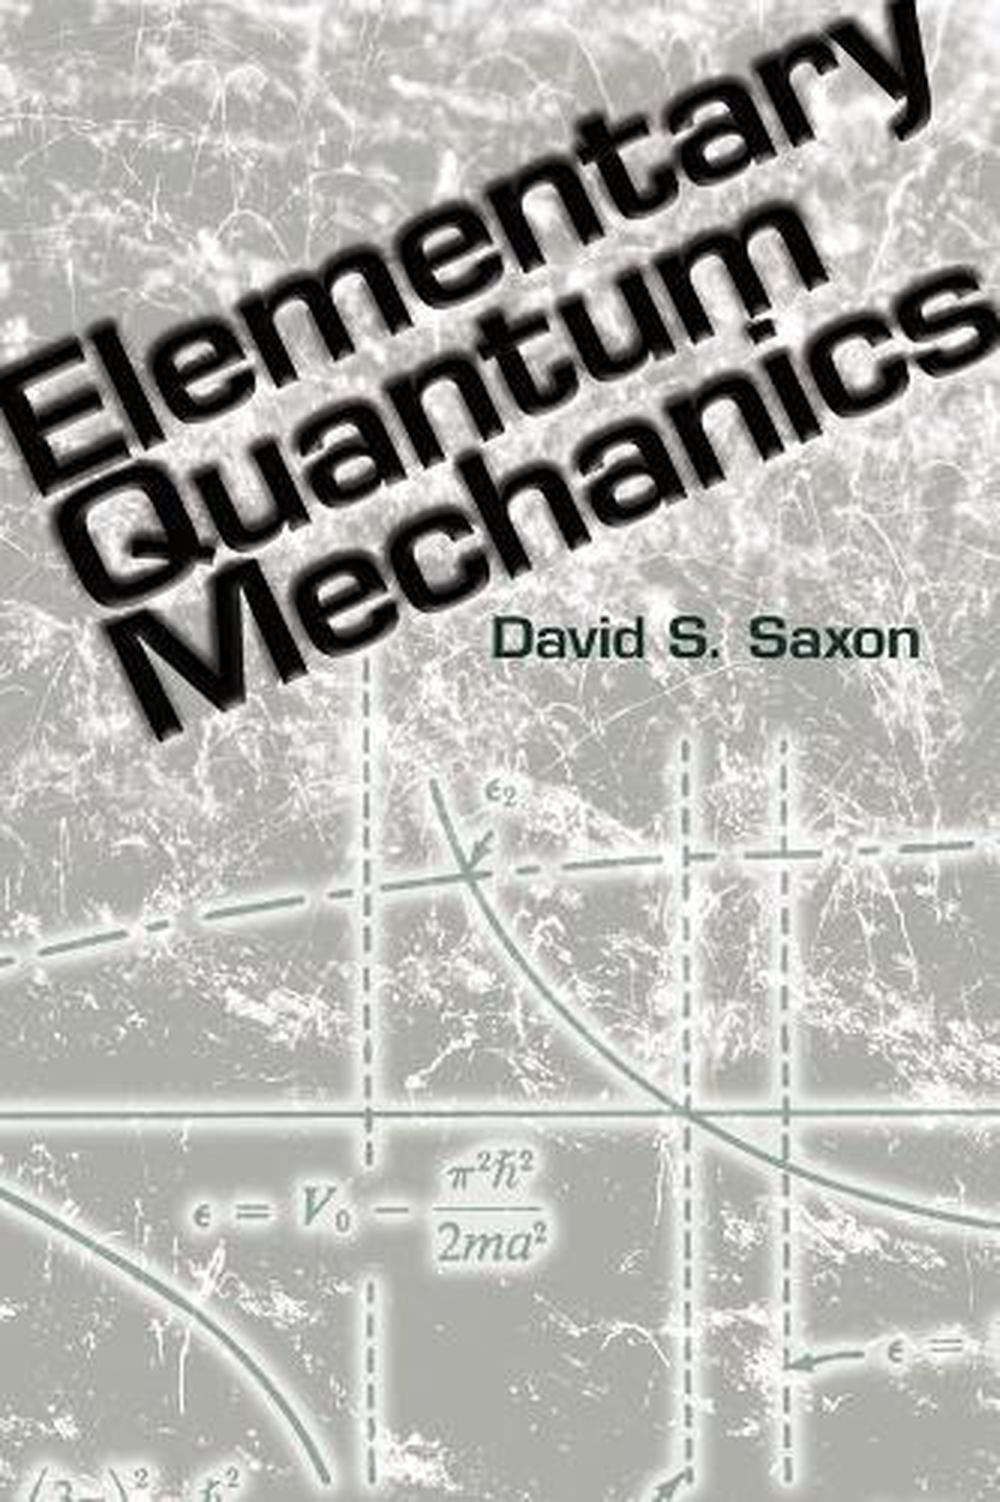 introduction to quantum mechanics griffiths second edition